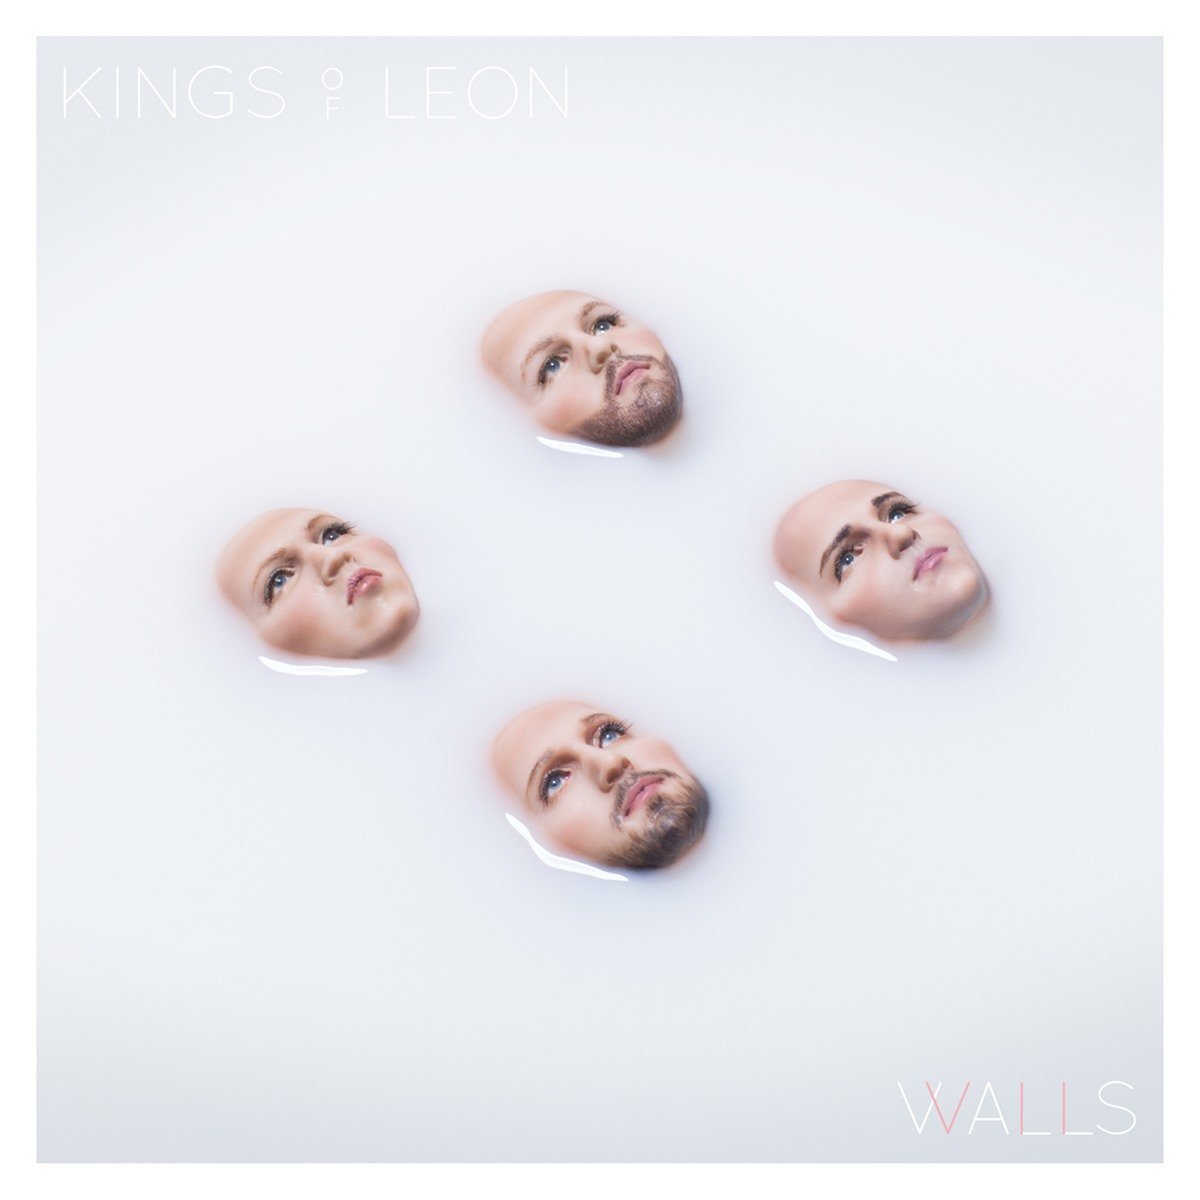 kings-leon-walls